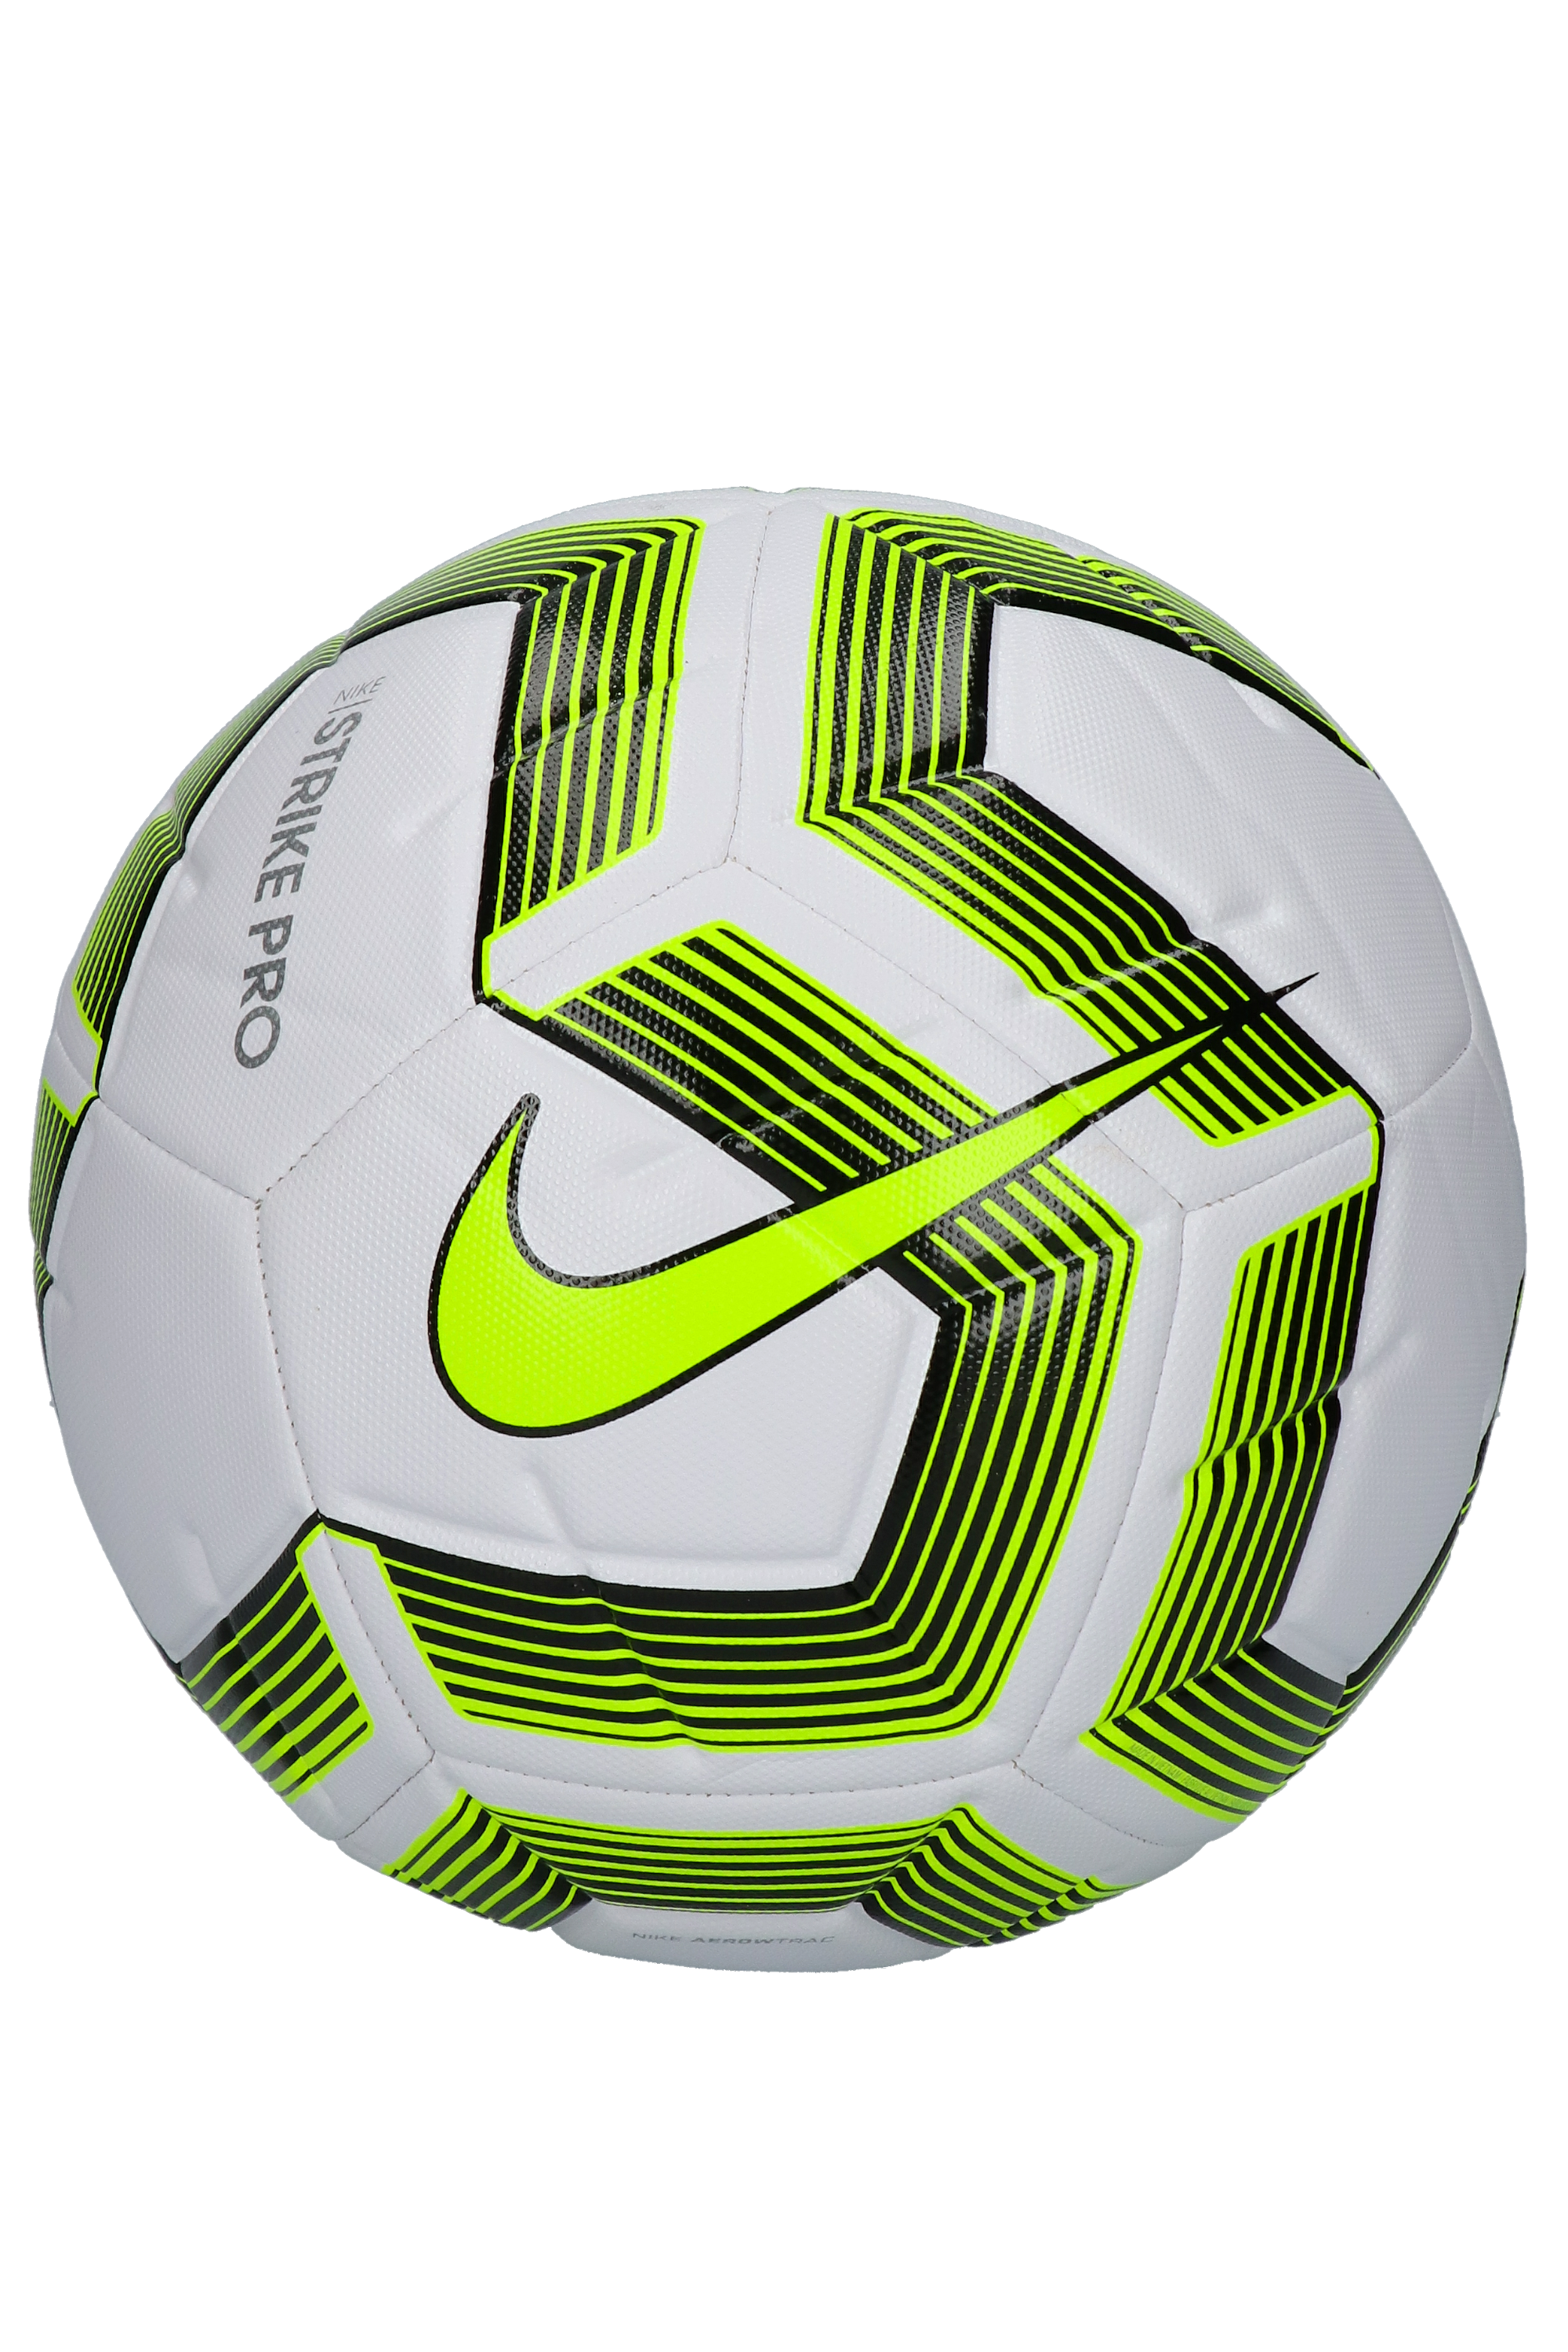 Ball Nike Strike Pro Team Ball size 4 